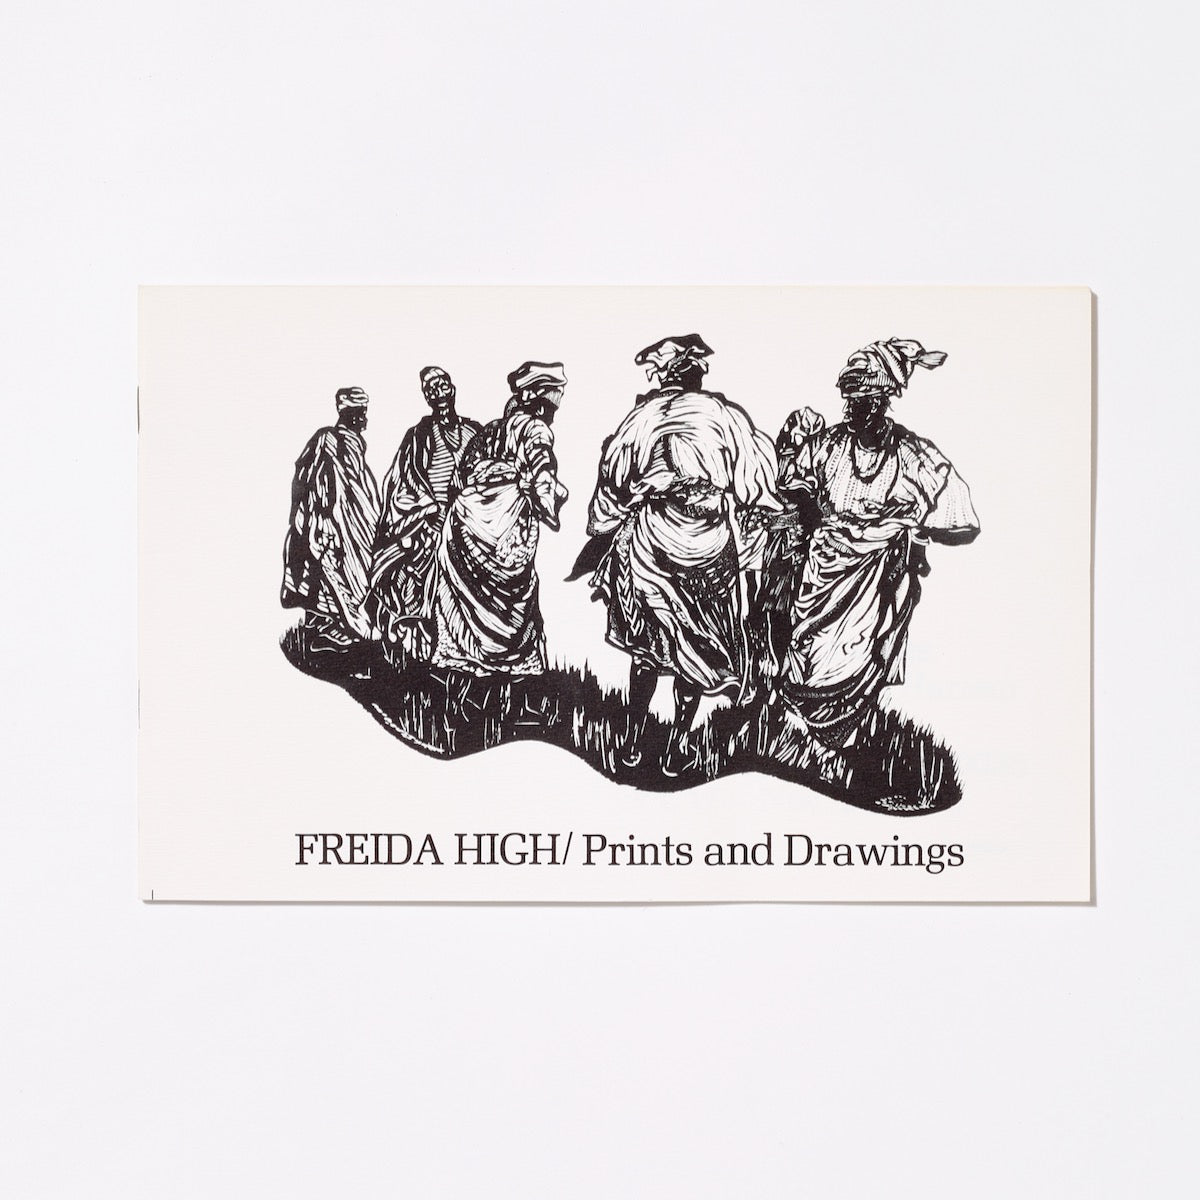 Freida High: Prints and Drawings